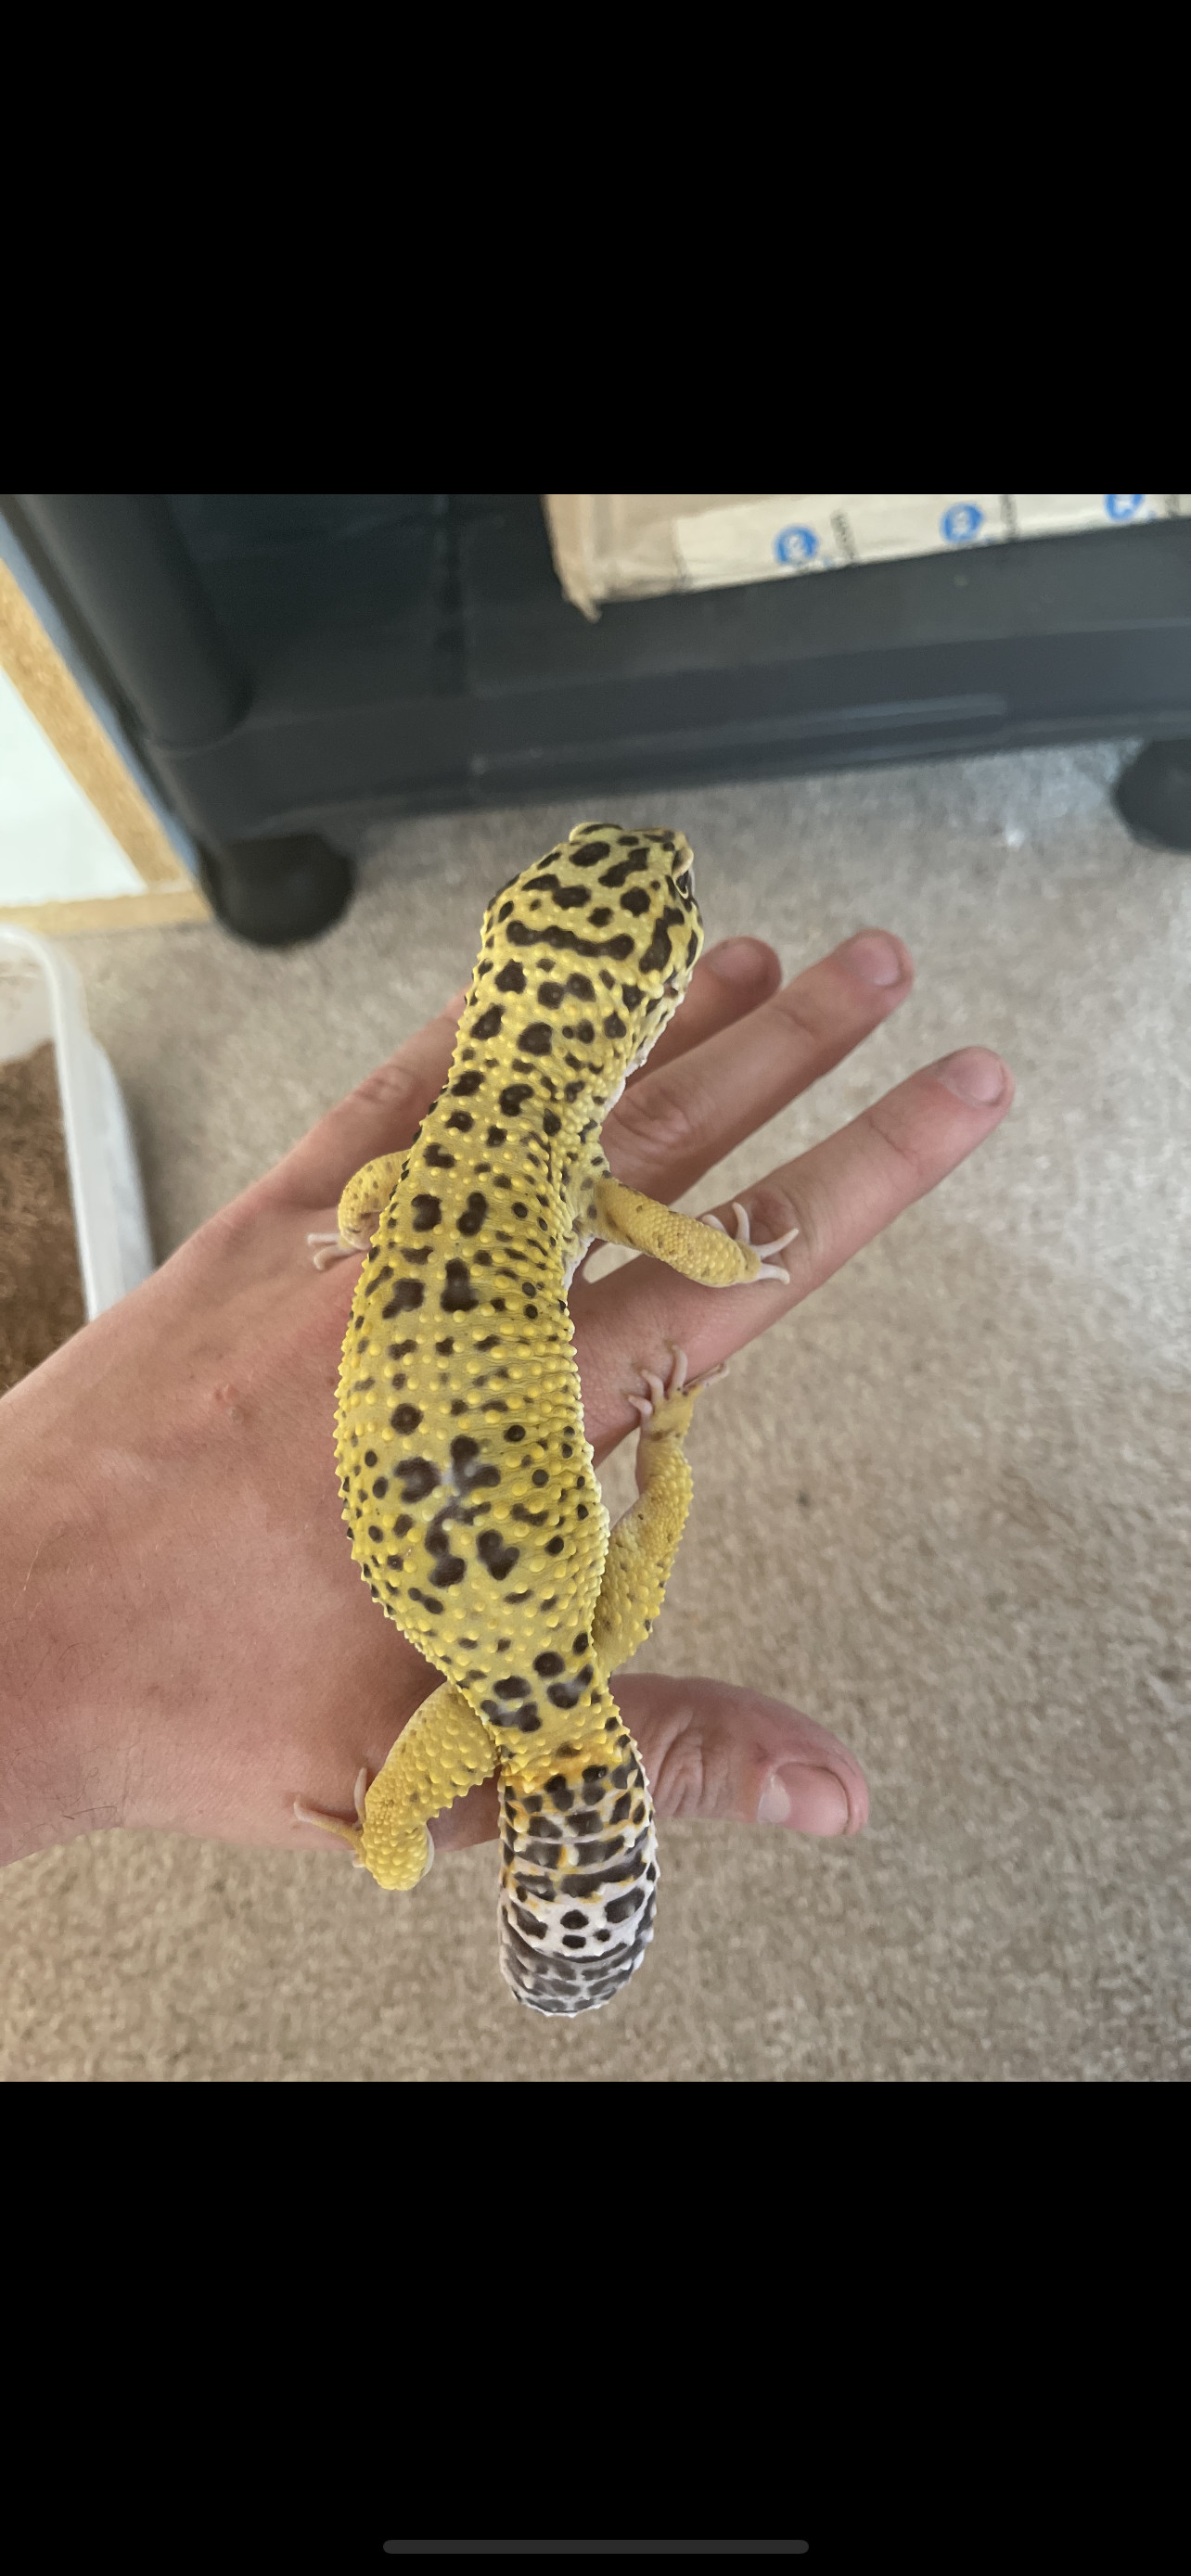 Giant Leopard Gecko by Carolina Royal Dragons